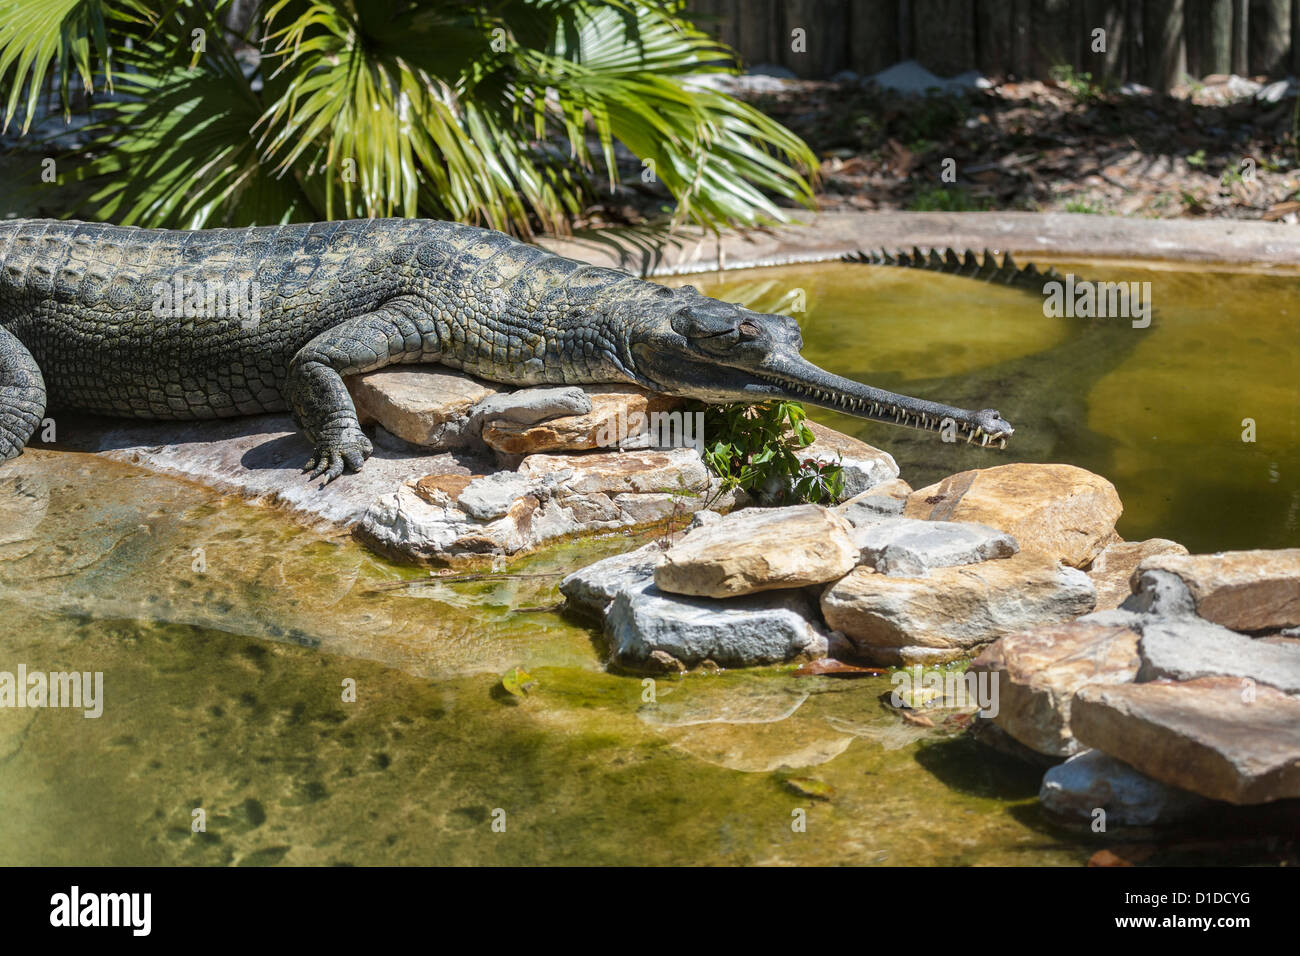 Indische Gangesgavial (Gavialis Gangeticus) crocodilian Sonnen am Felsen in St. Augustine Alligator Farm Zoological Park, Florida Stockfoto